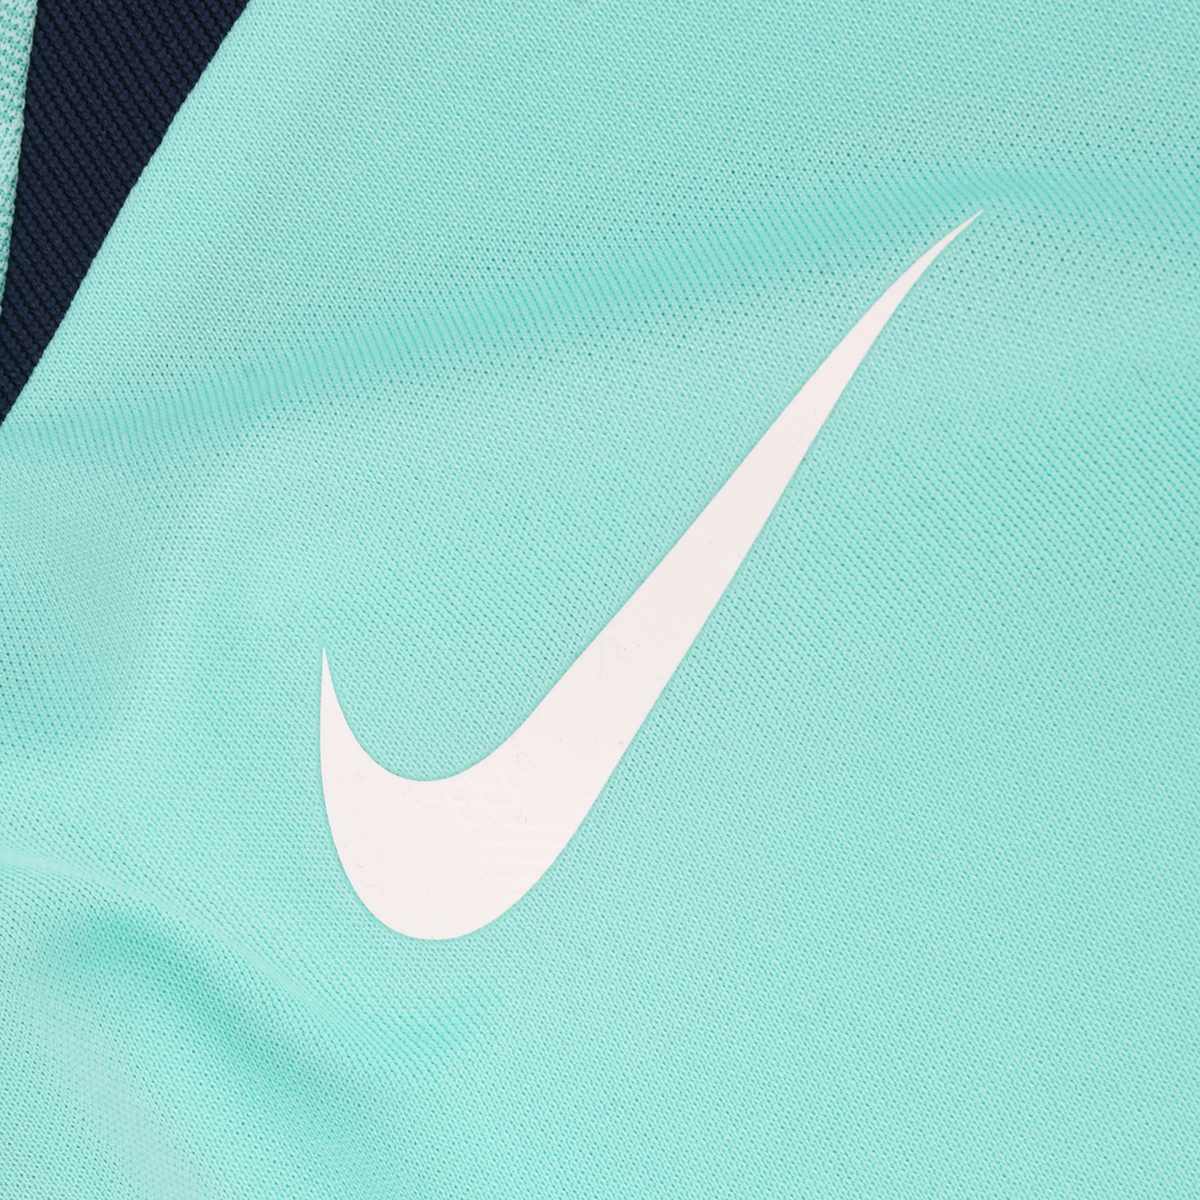 Camiseta Fútbol Nike Dri-fit Strike Hombre,  image number null